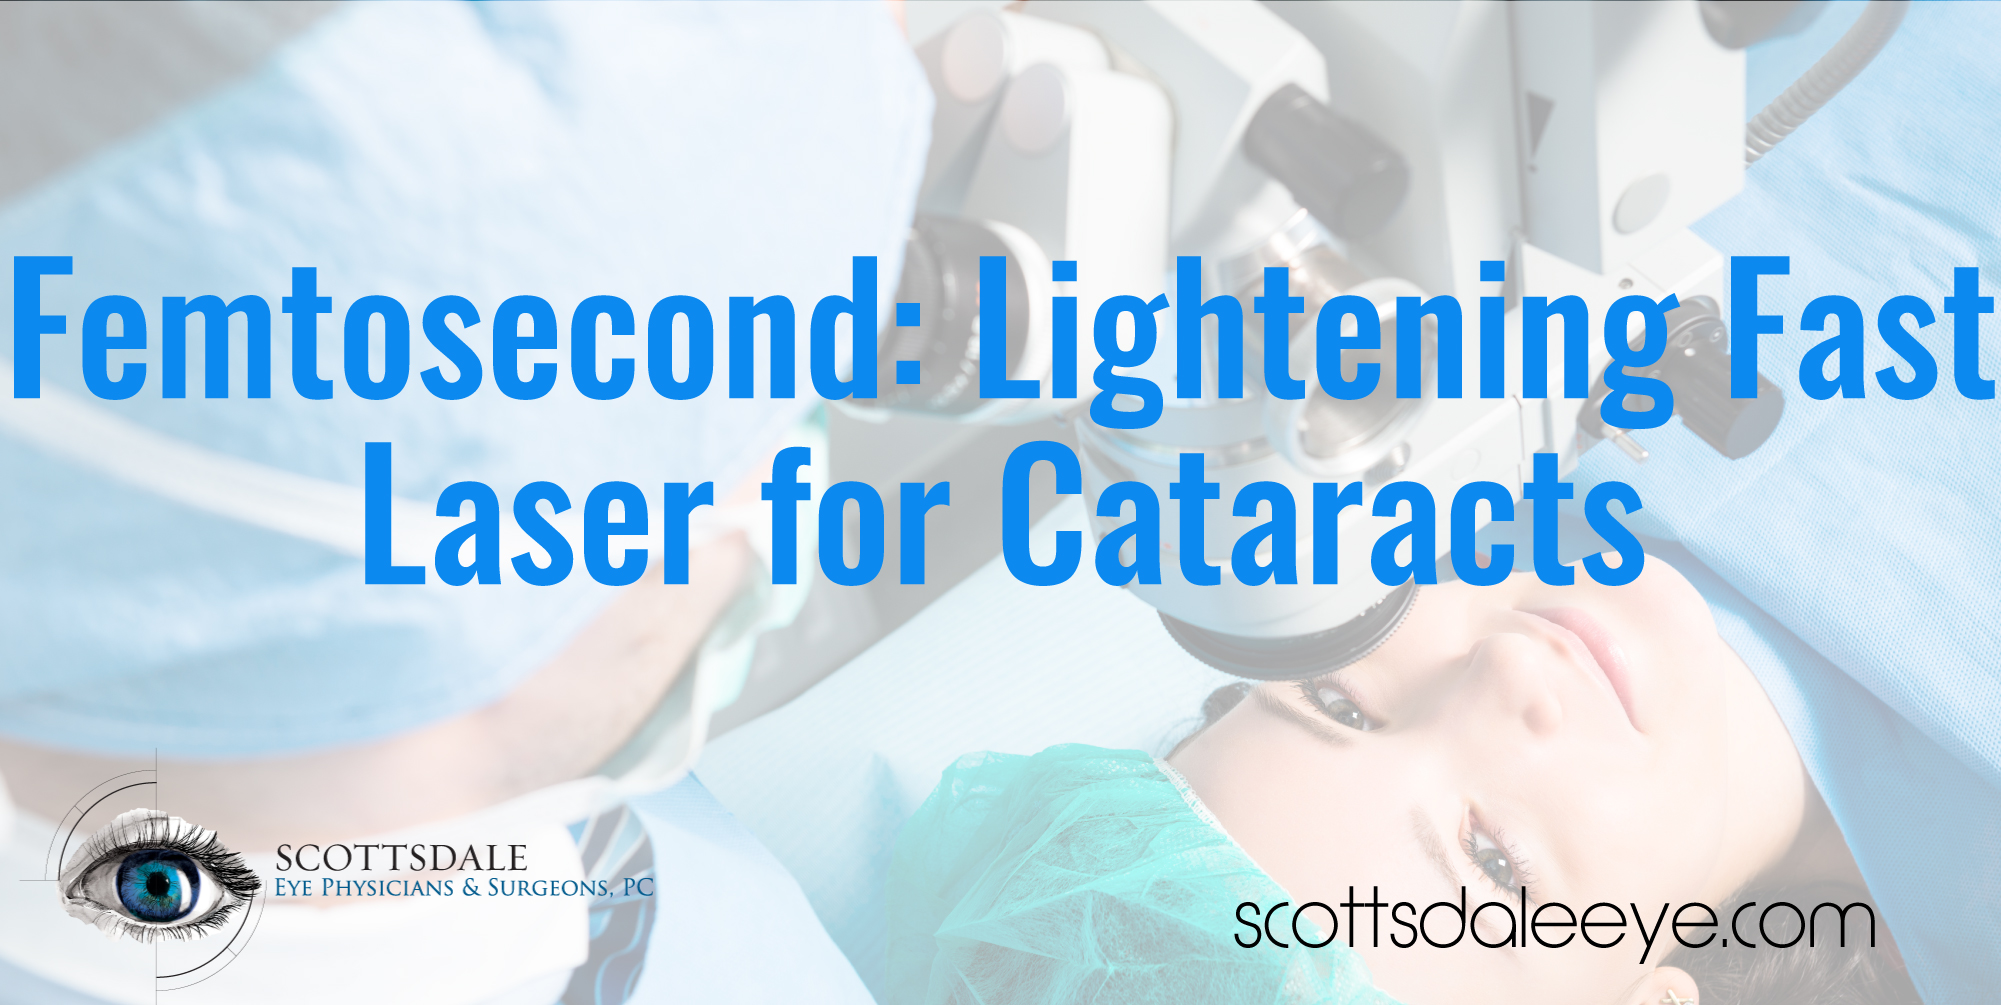 Femtosecond: Lightening Fast Laser for Cataracts